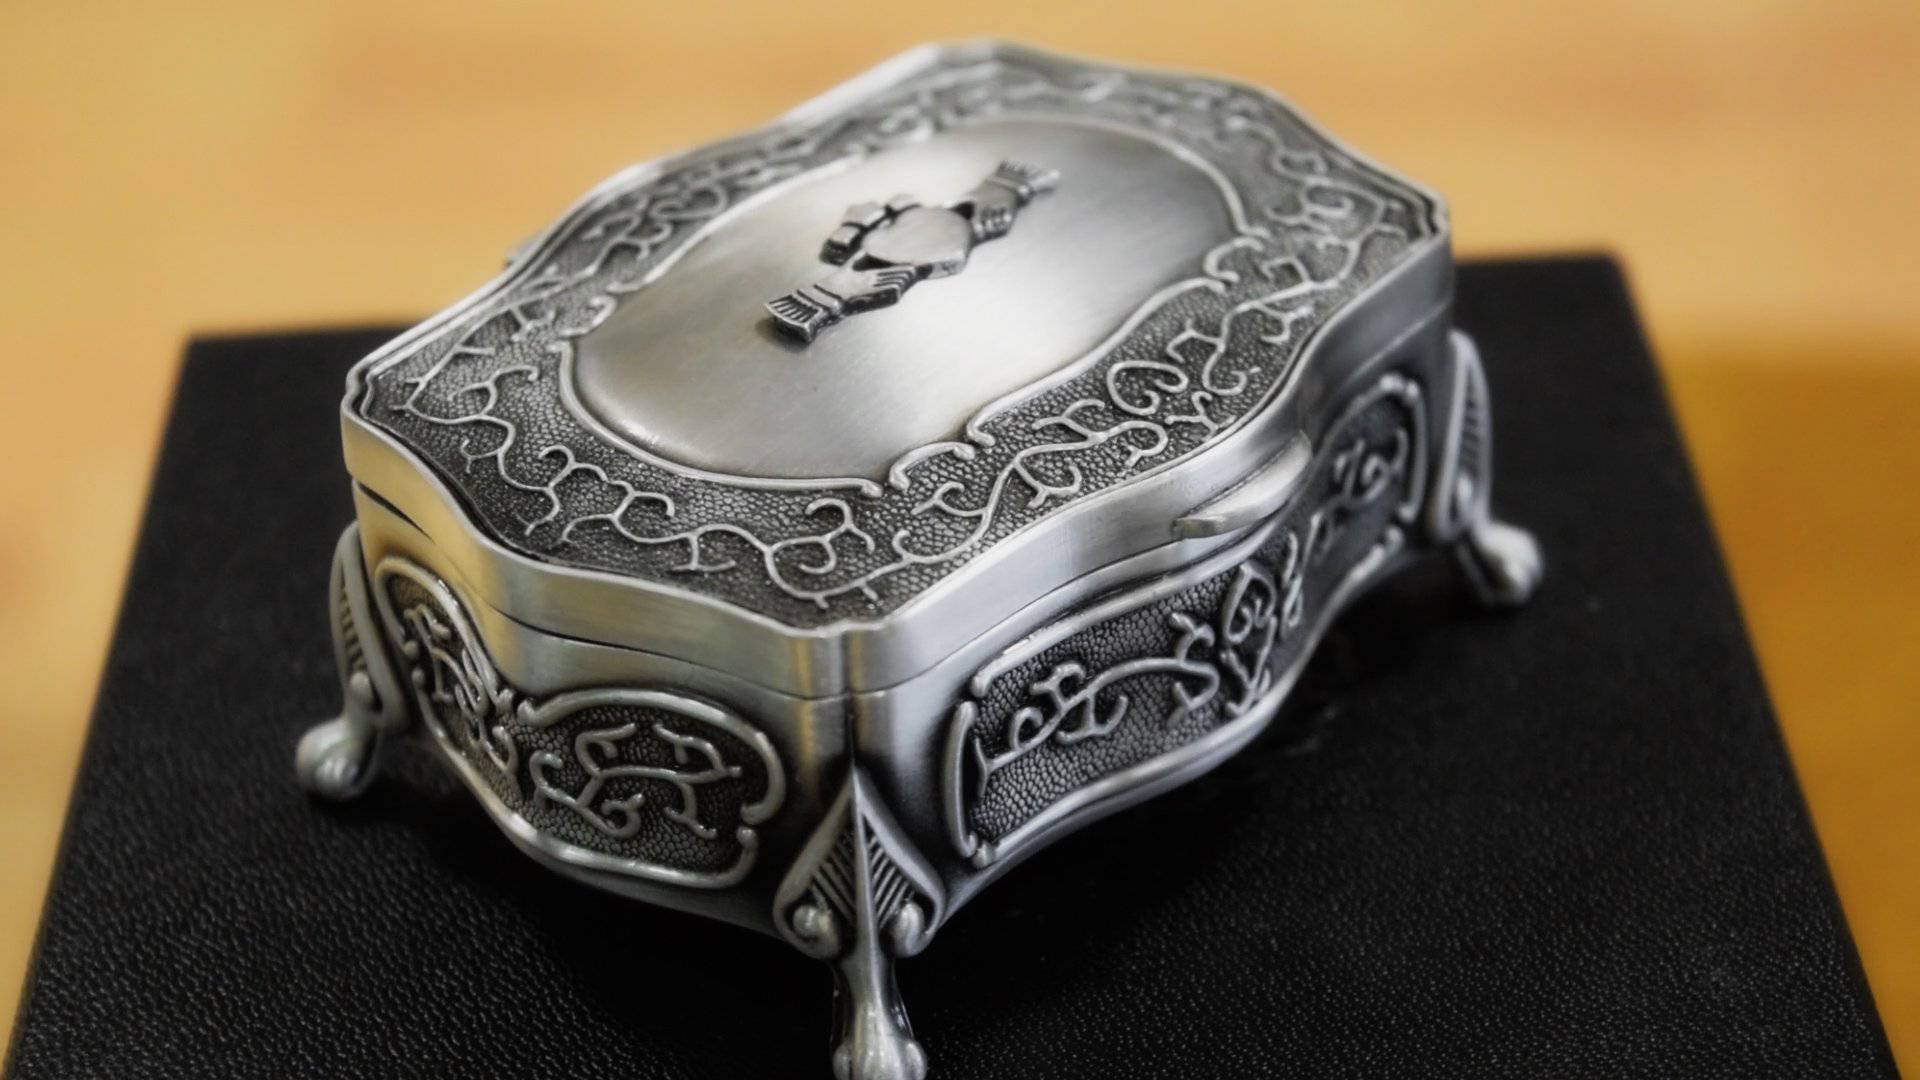 Mullingar Pewter Jewelry Box with Claddagh Design